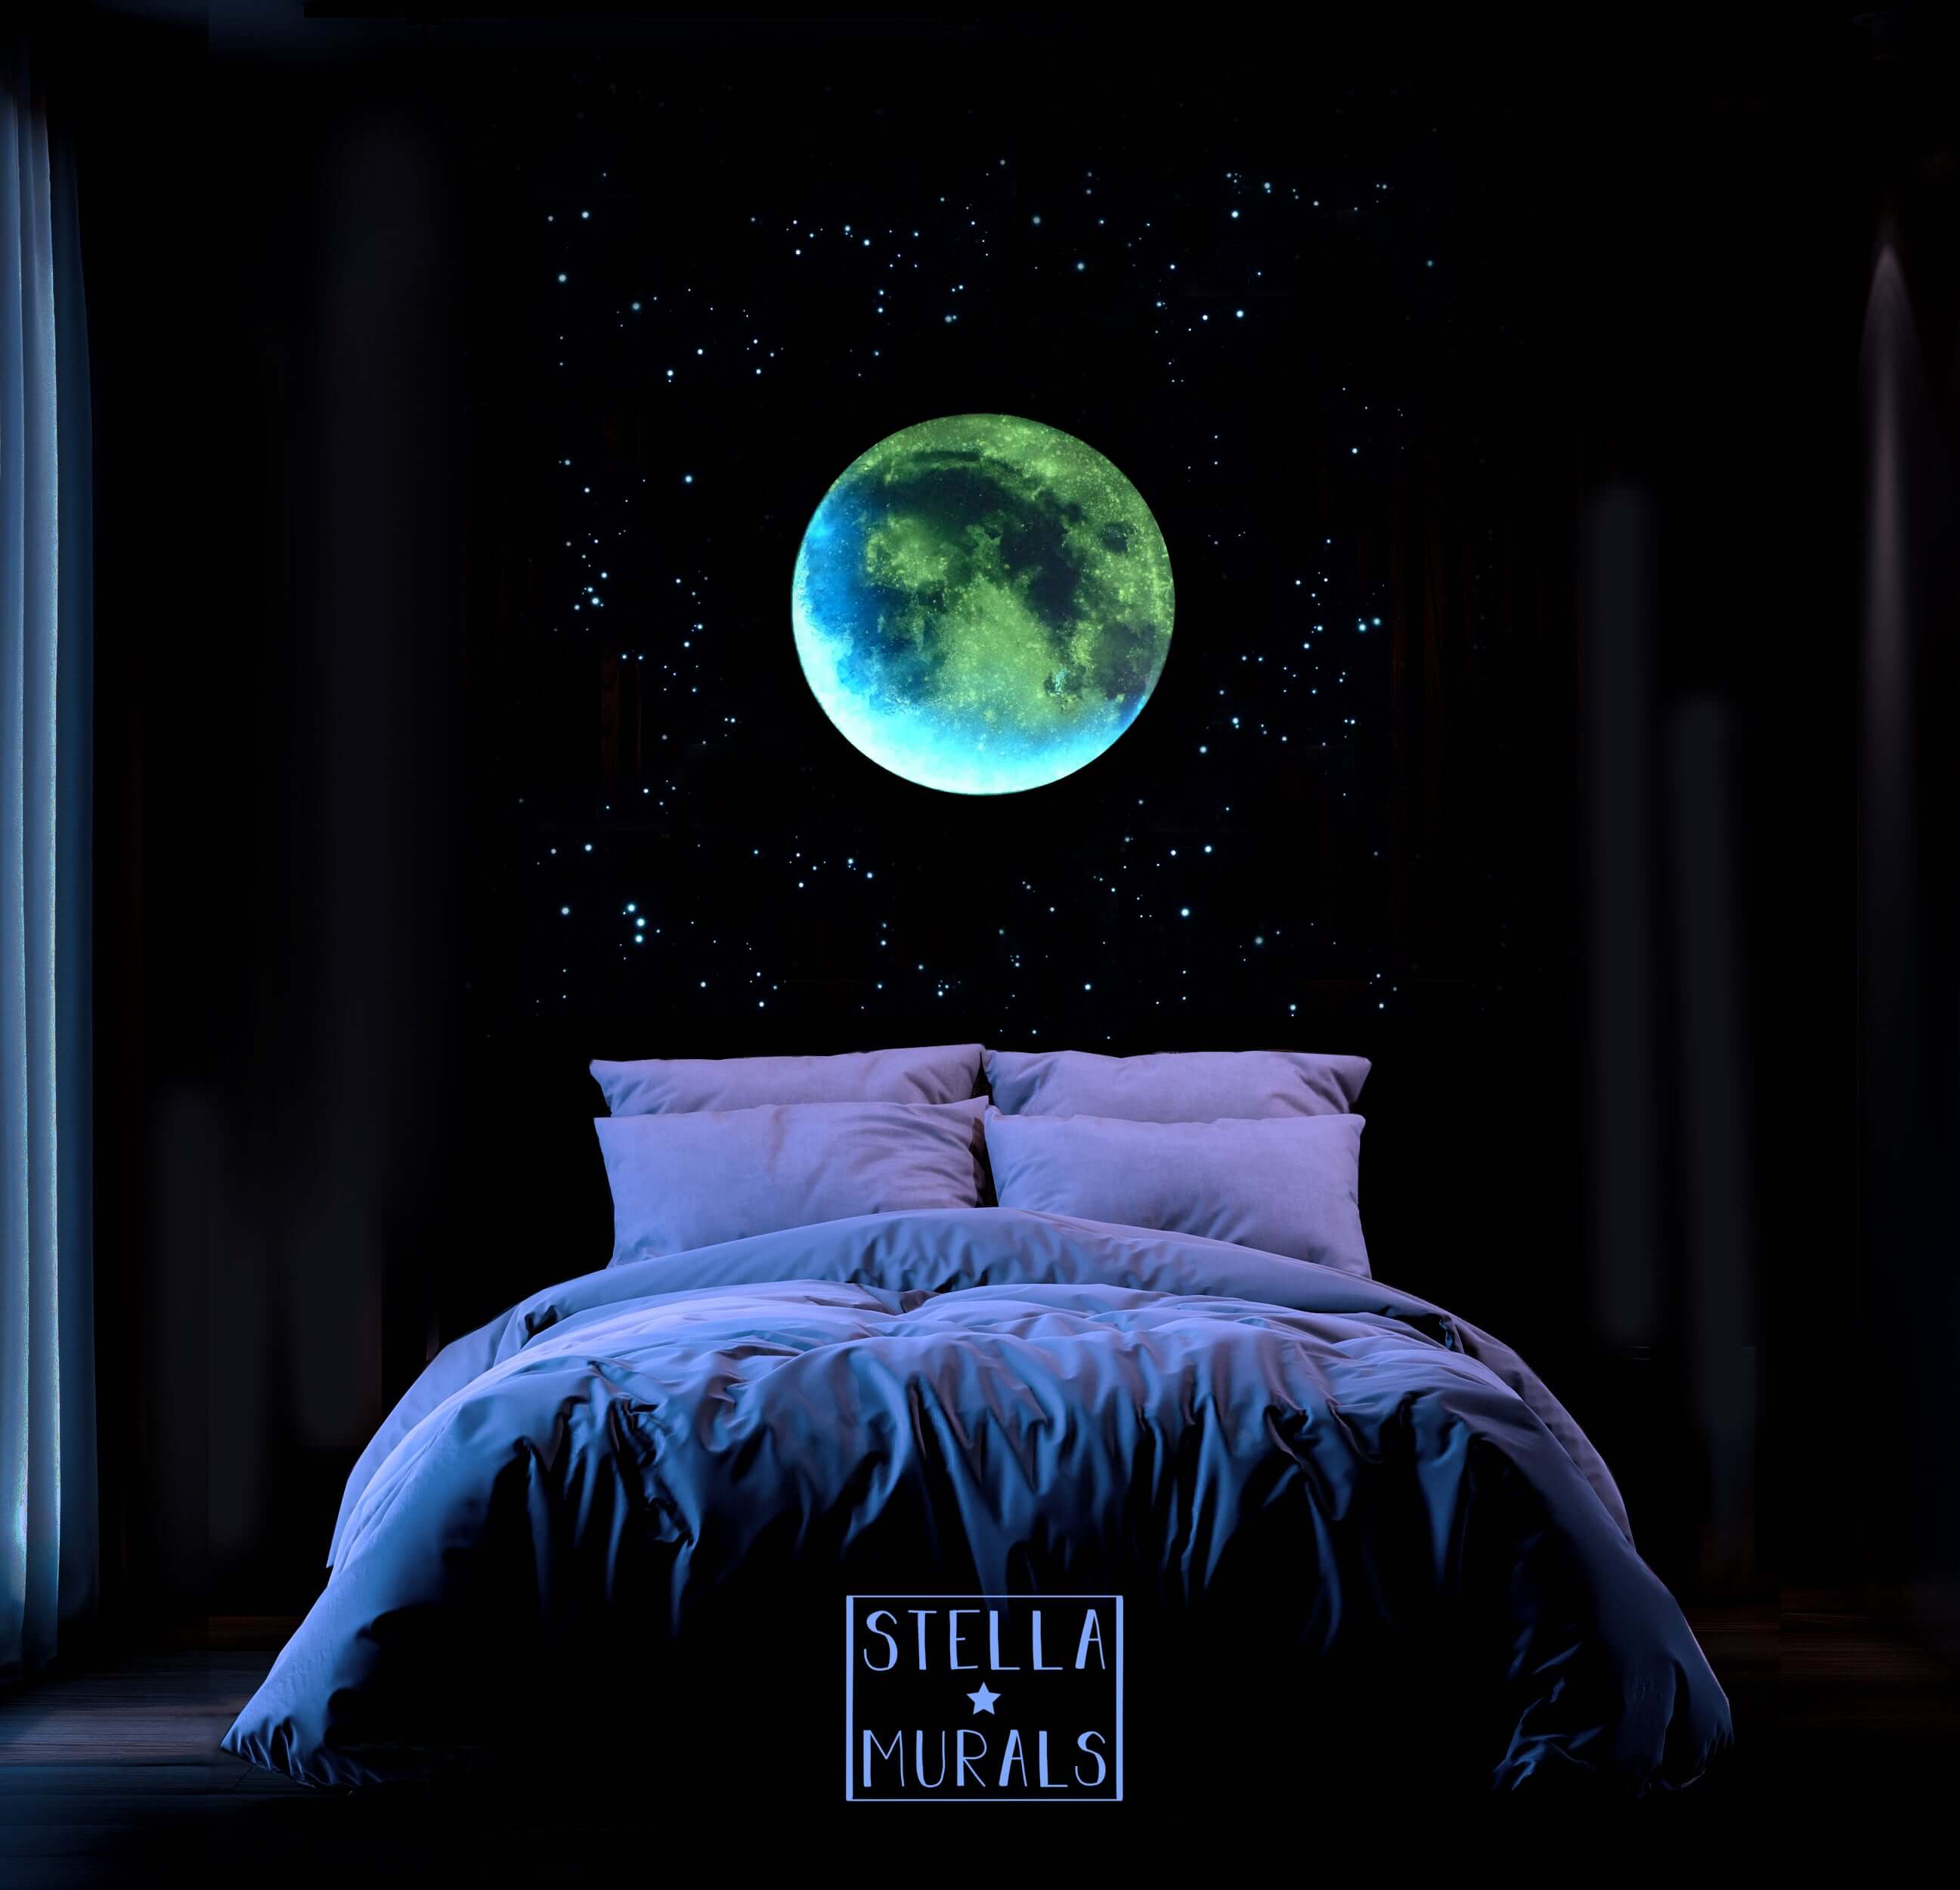 glow in the dark moon decal on bedroom wall. 3D realistic handpainted glow in the dark stars